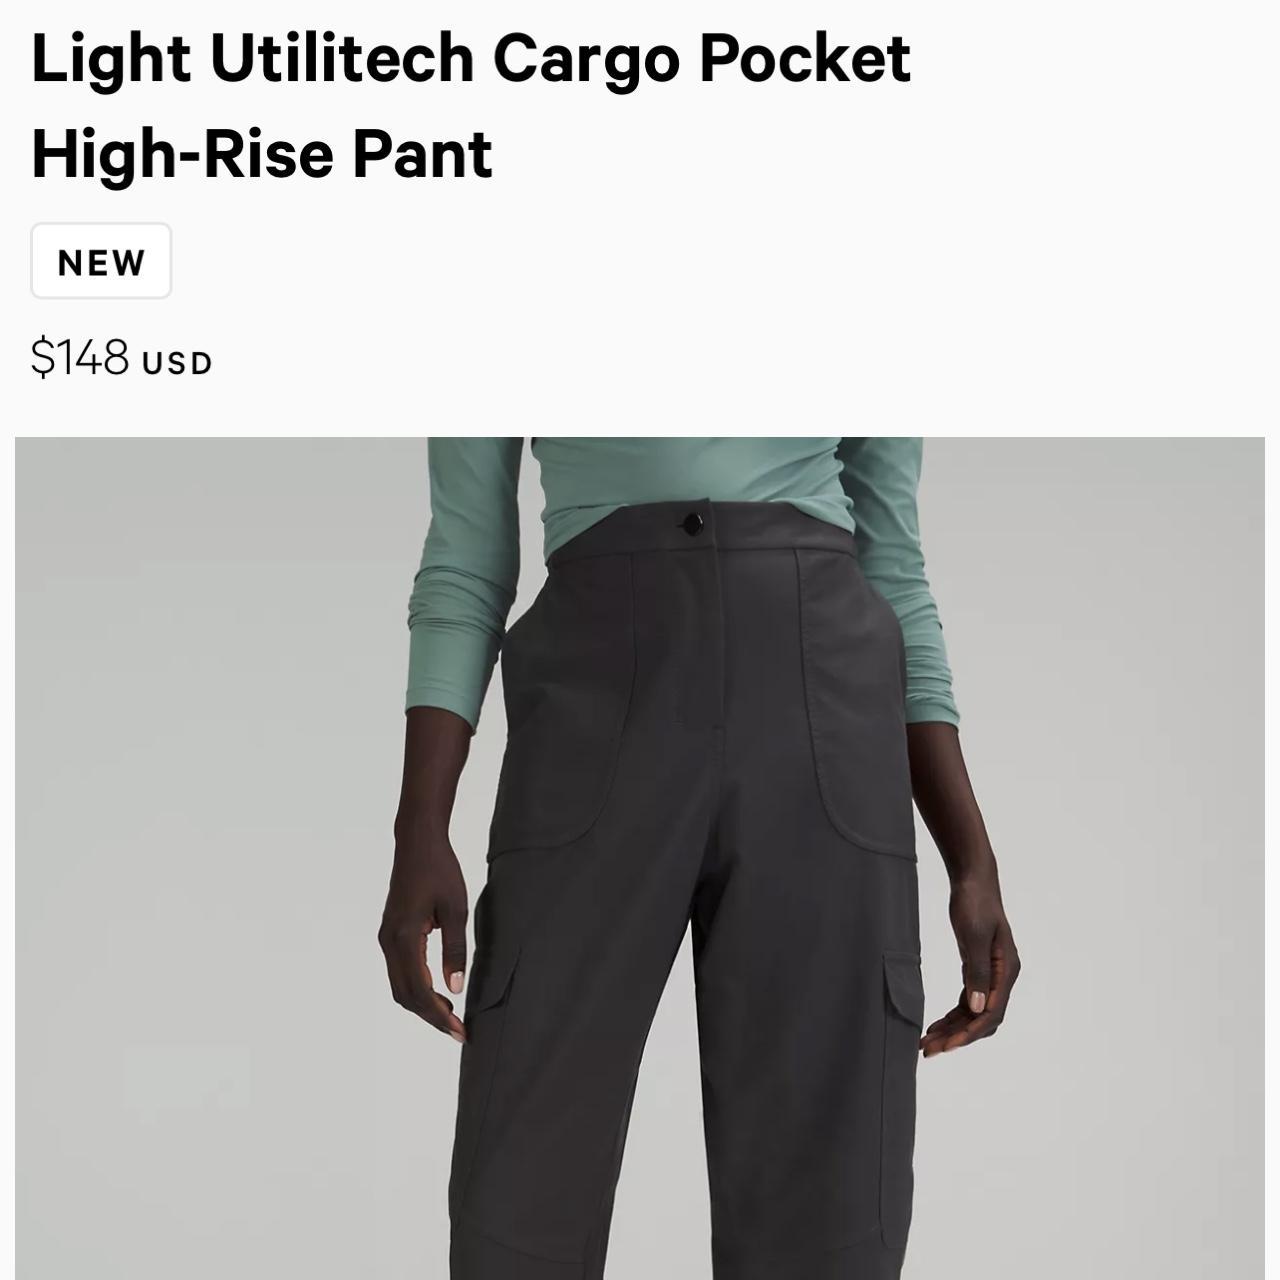 Light Utilitech Cargo Pocket High-Rise Pant